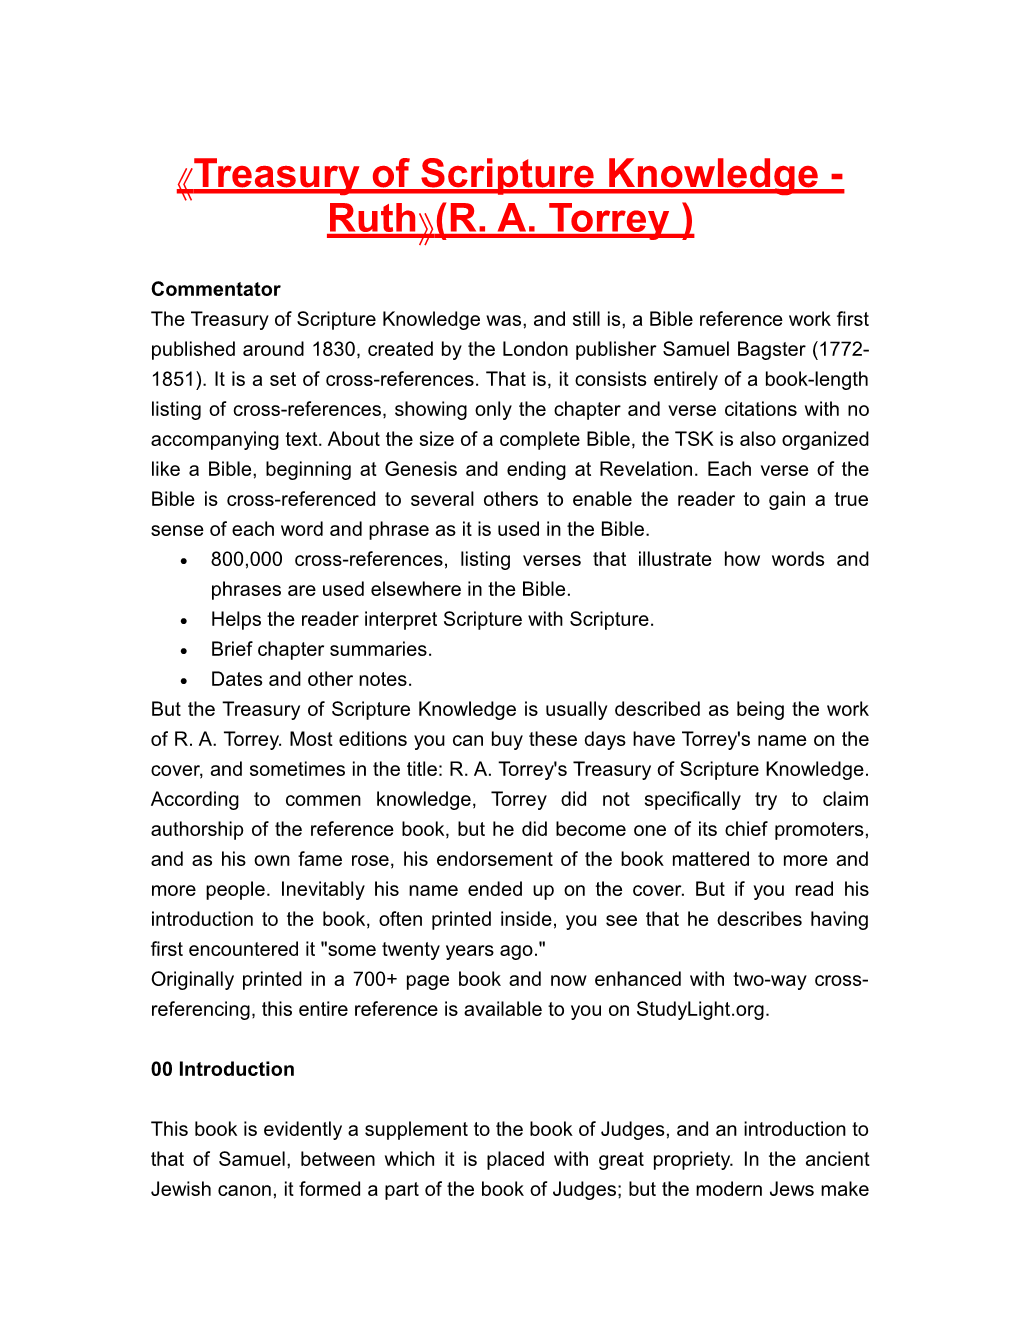 Treasuryofscriptureknowledge - Ruth (R. A.Torrey)